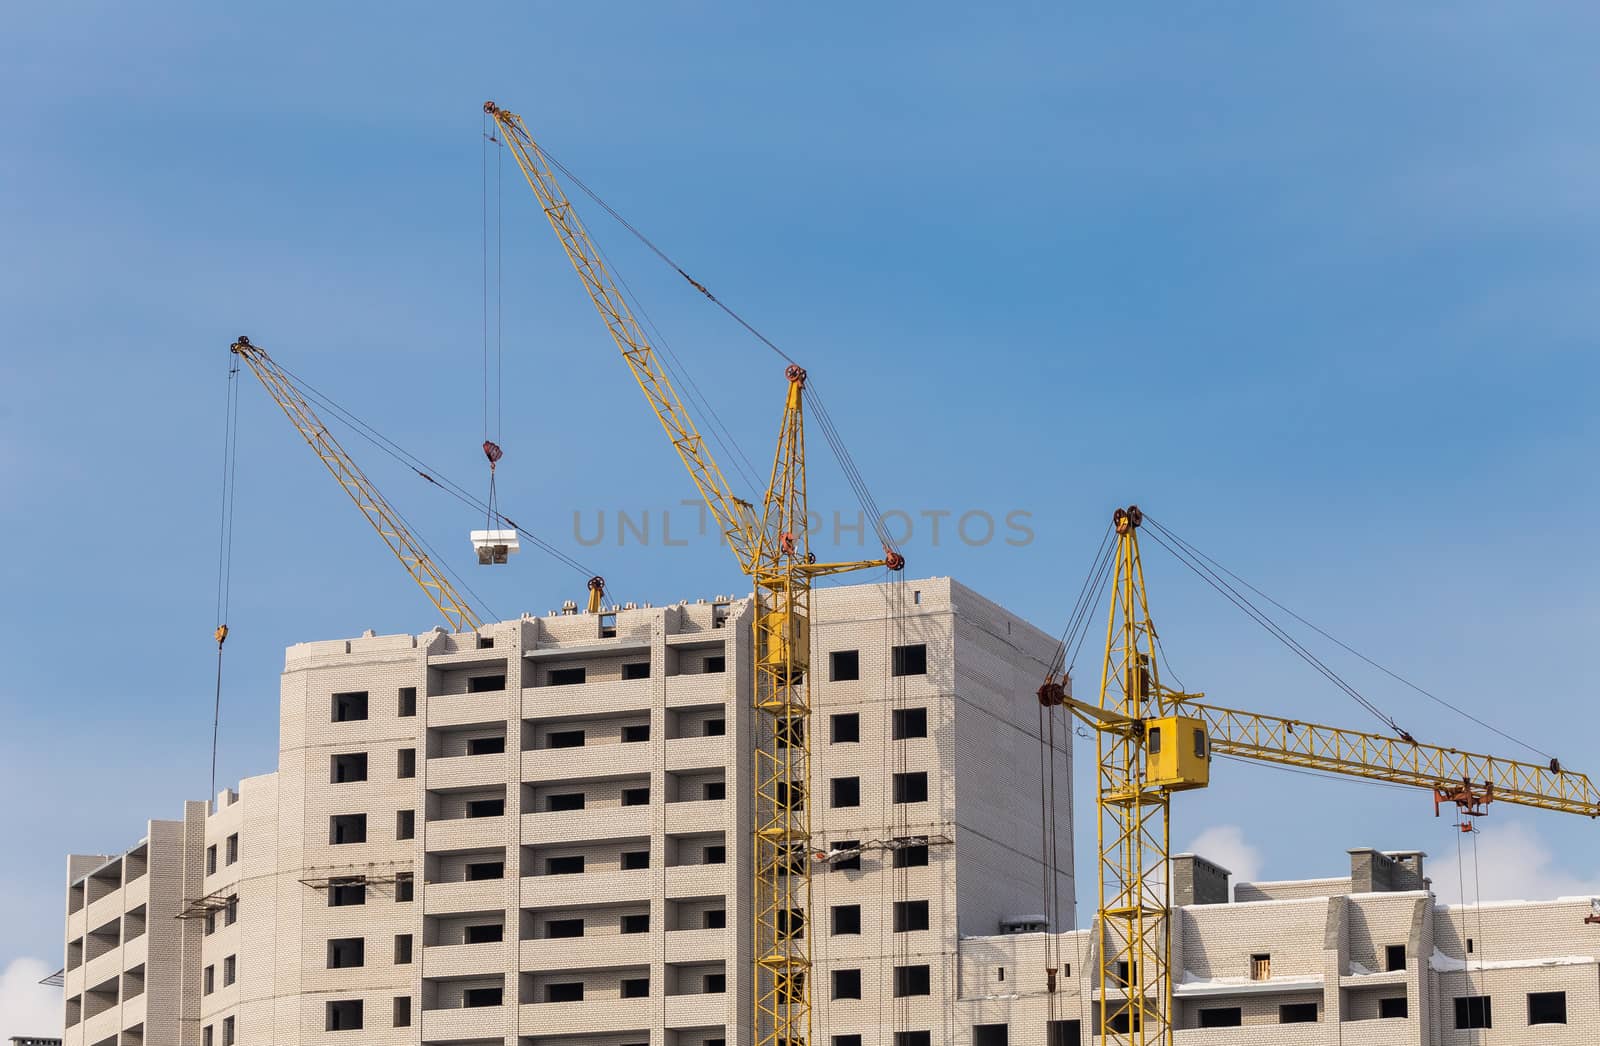 Unfinished apartment buildings. Construction workers, cranes by DamantisZ